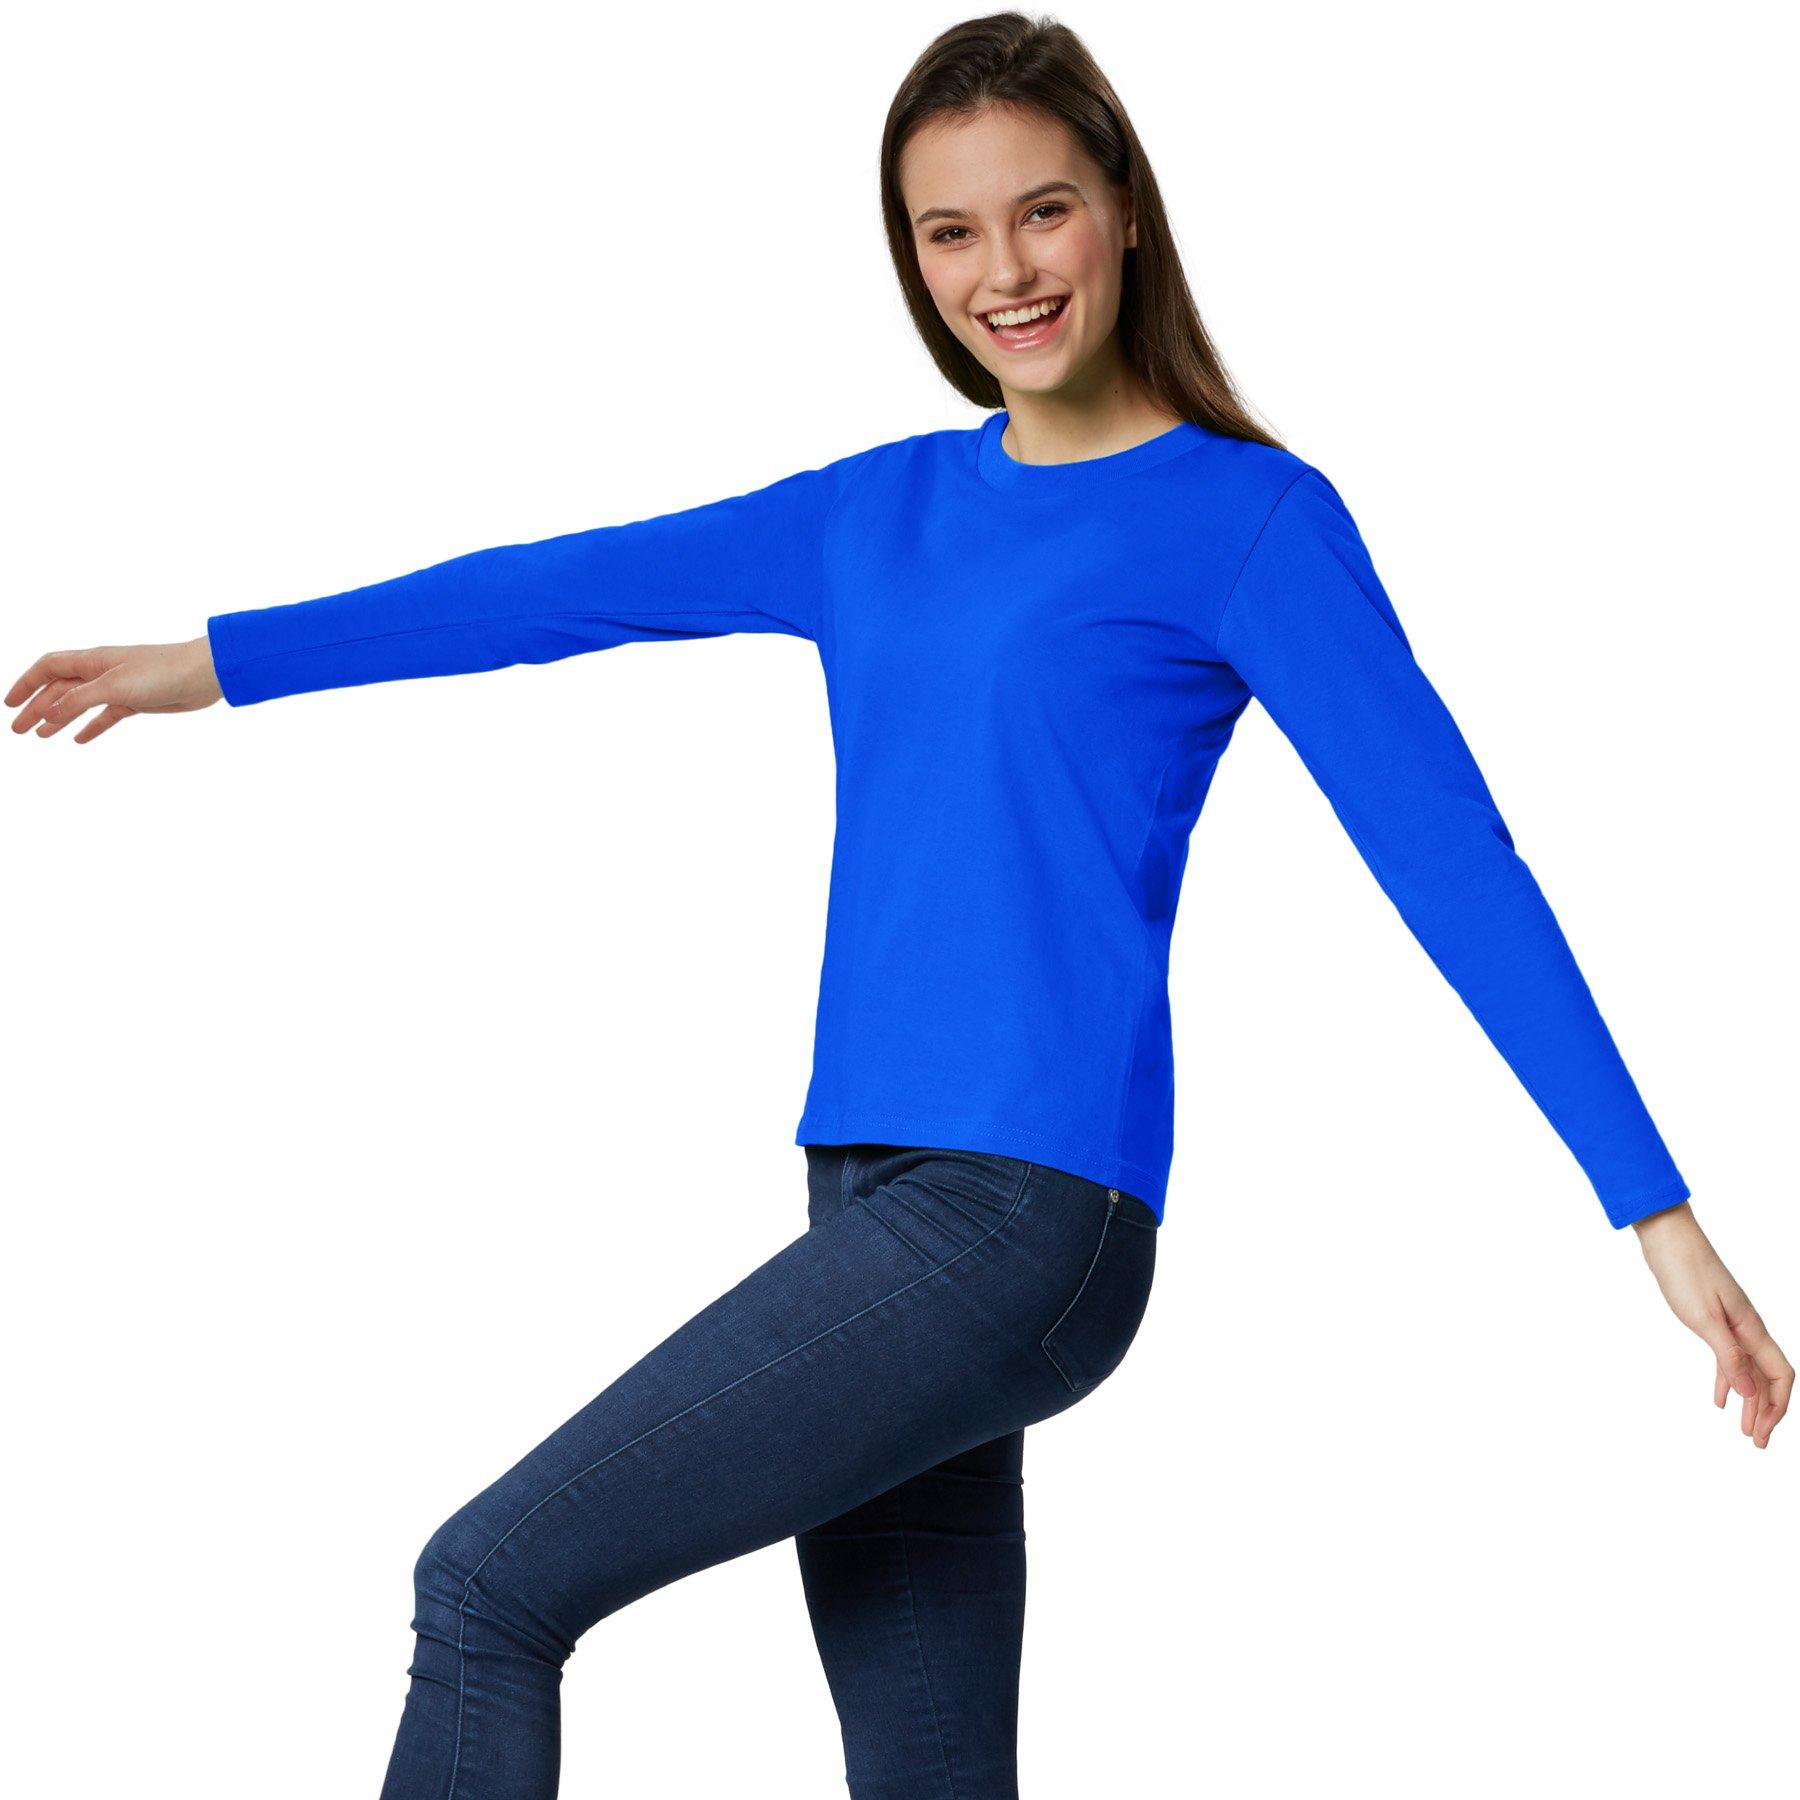 Langarm-shirt Frauen Damen Blau XL von Tectake